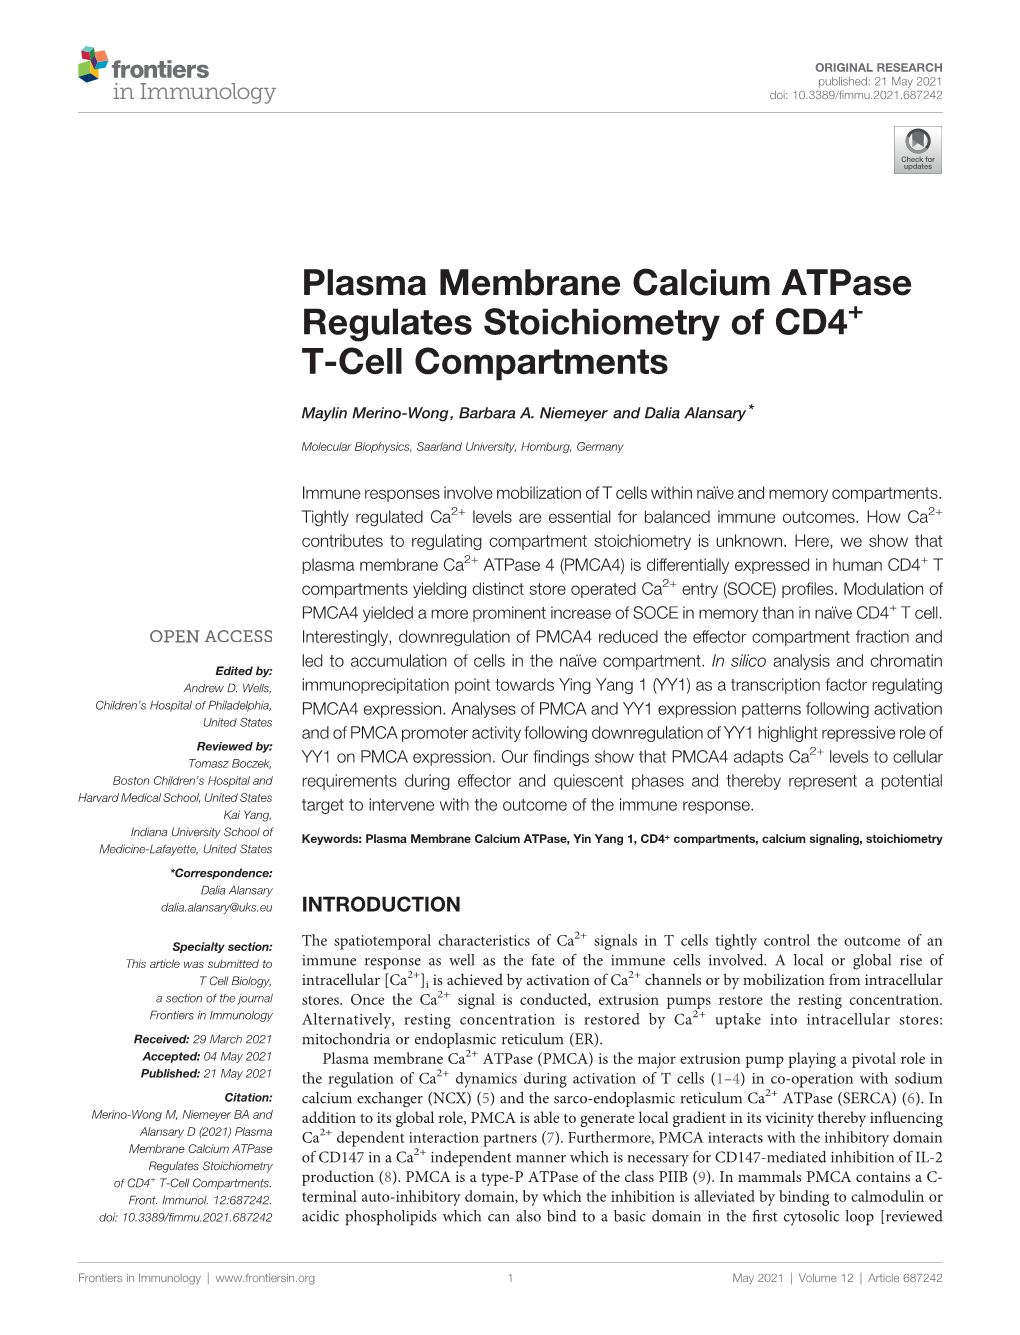 Plasma Membrane Calcium Atpase Regulates Stoichiometry of CD4+ T-Cell Compartments